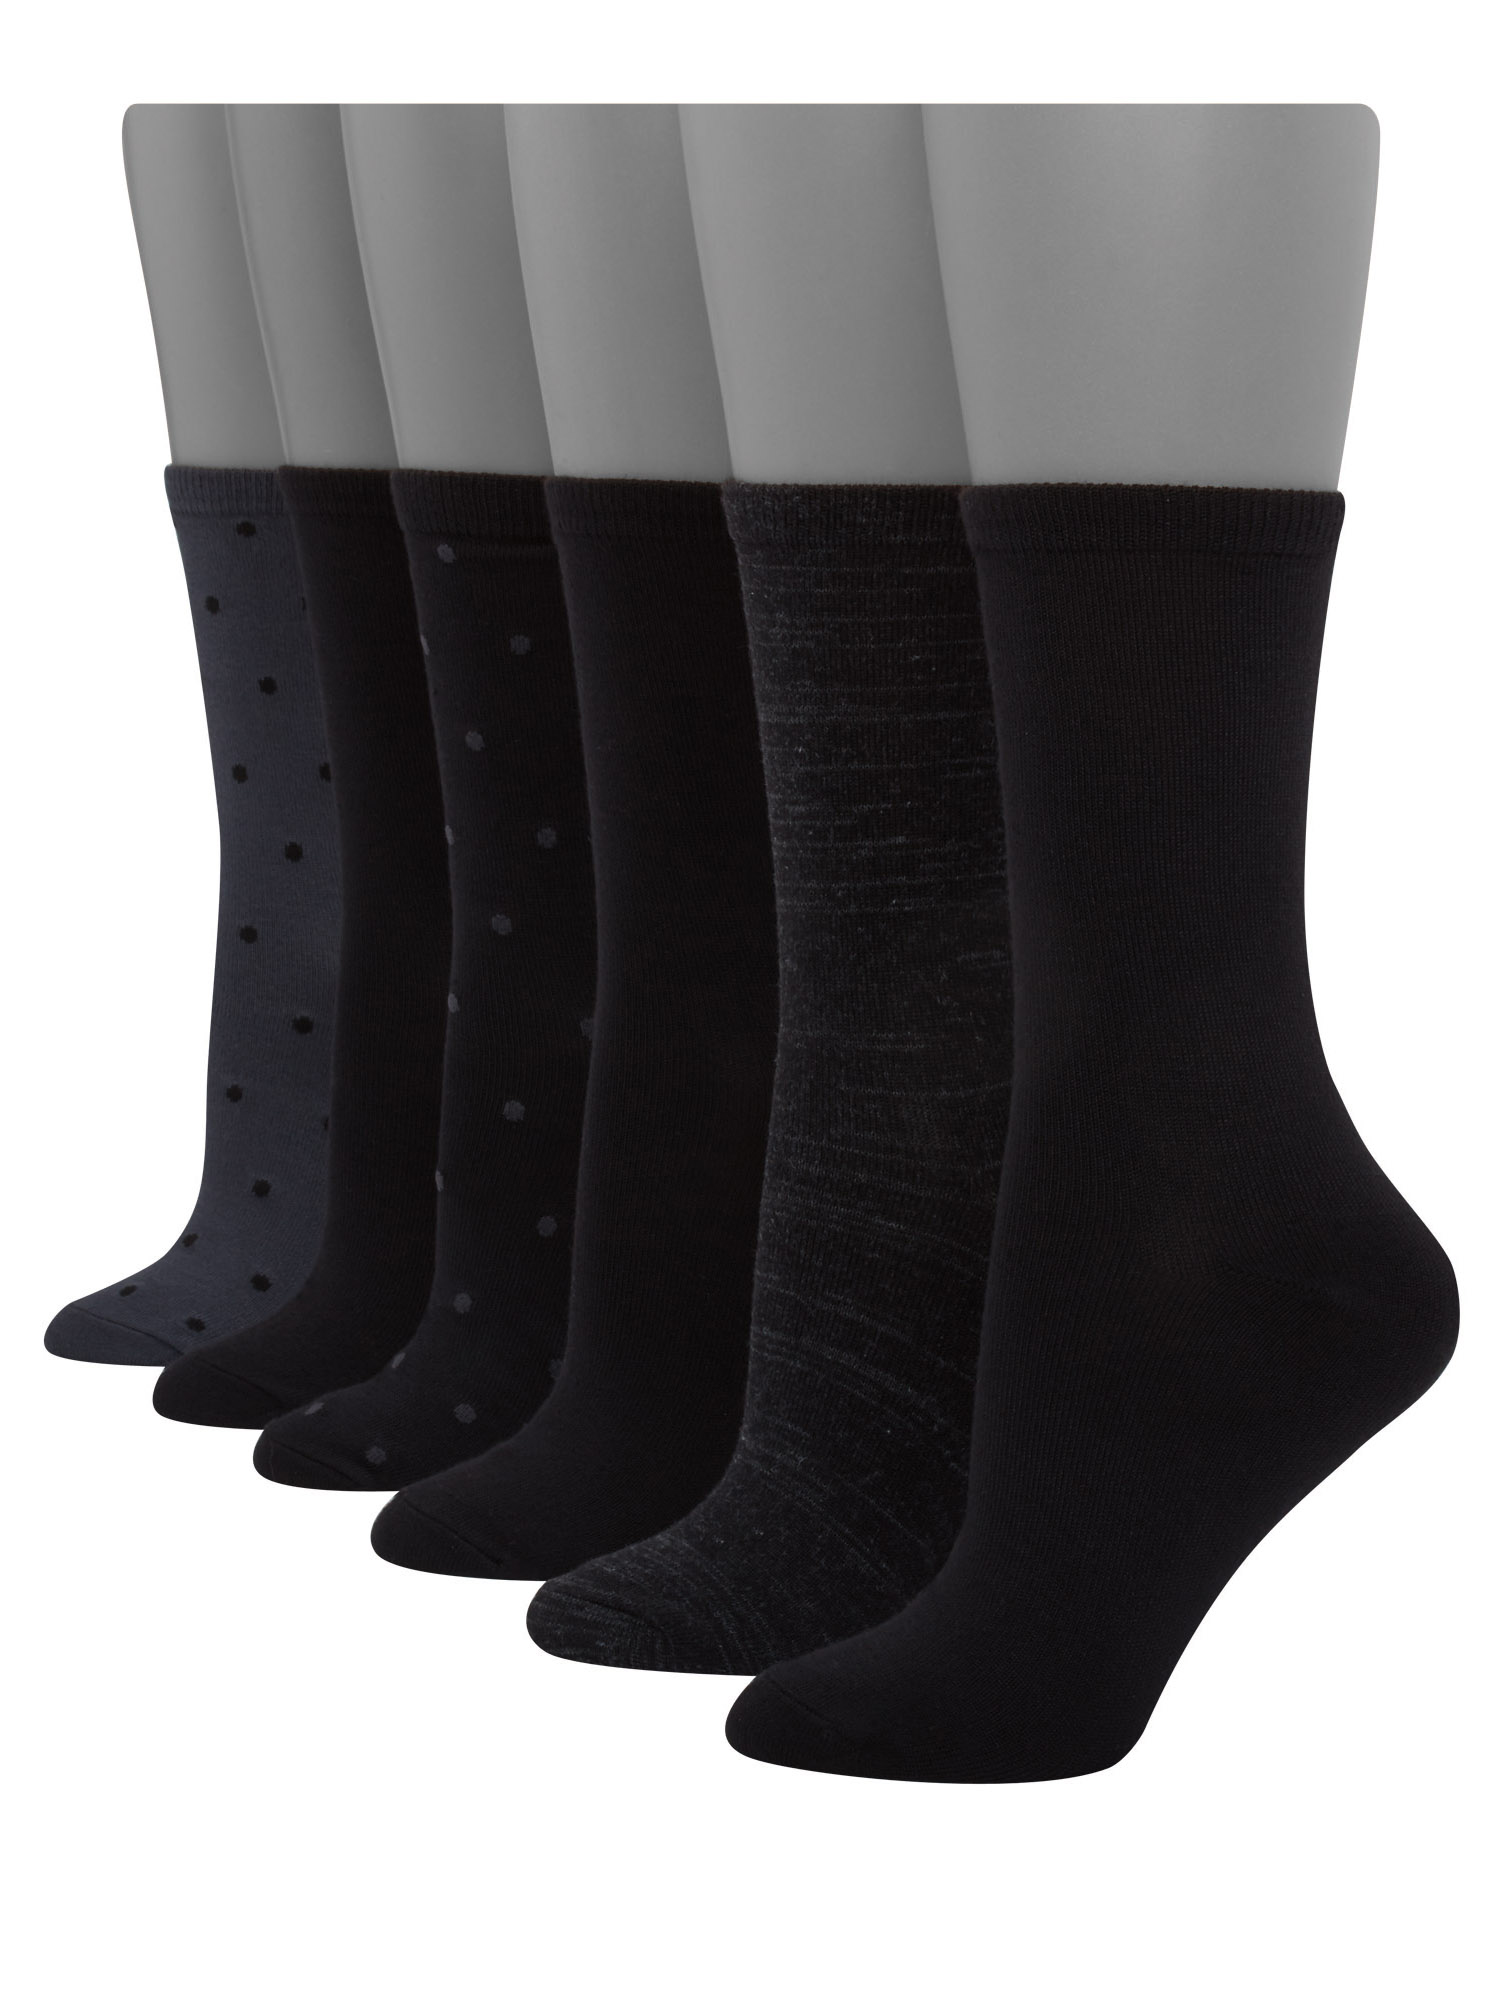 Hanes Women's ComfortSoft Crew Socks, 6 Pack - Walmart.com